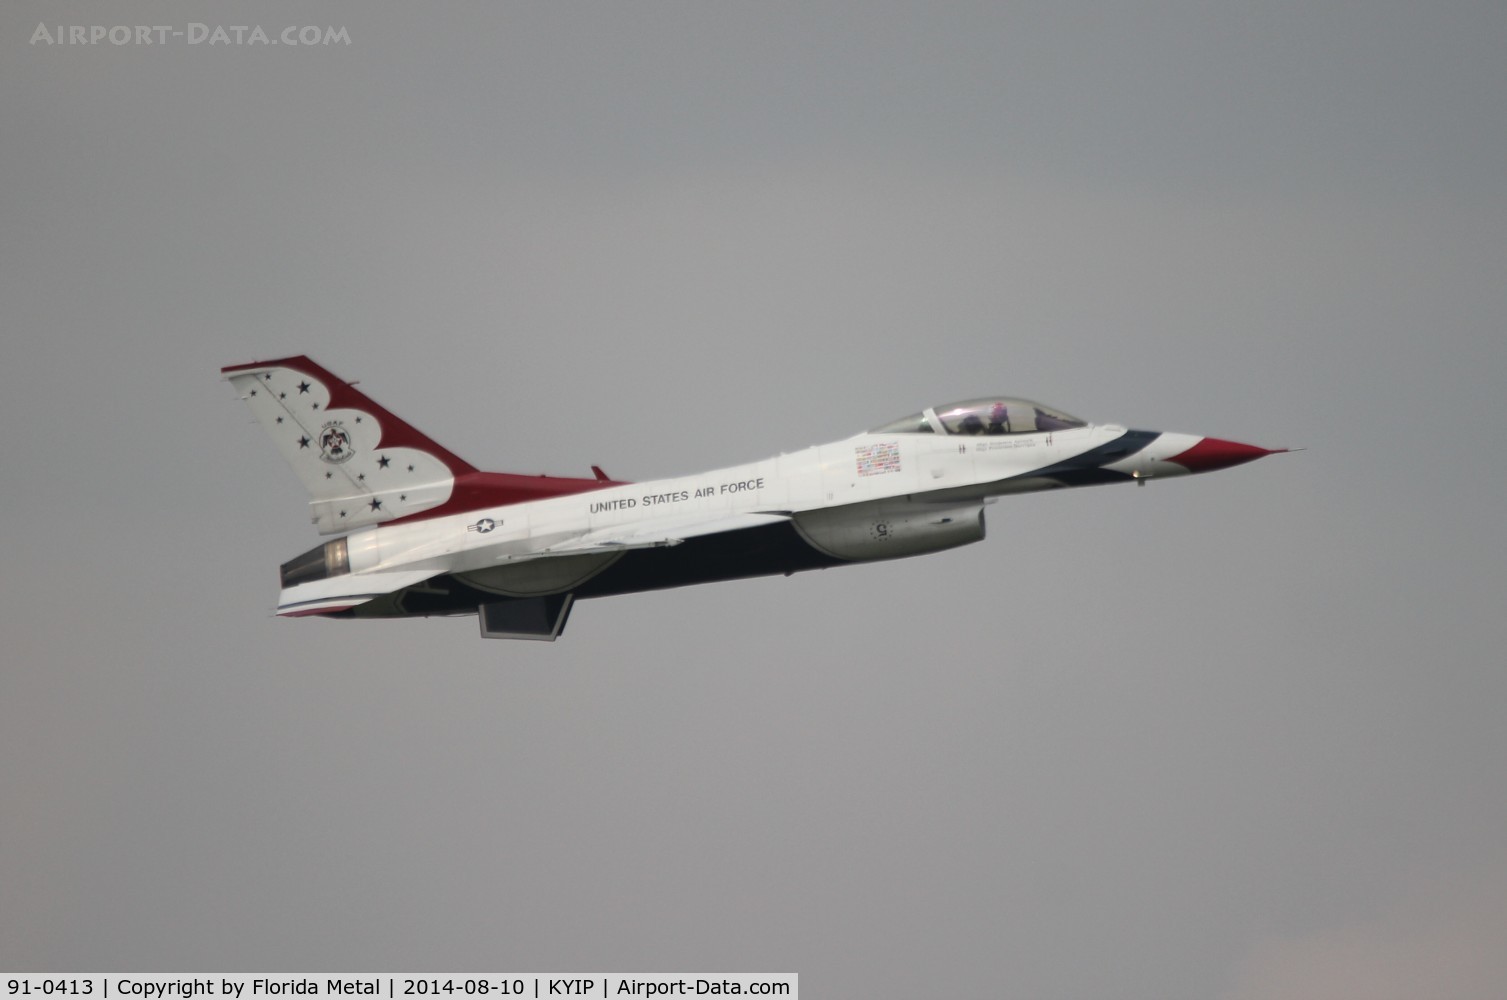 91-0413, 1991 General Dynamics F-16CJ Fighting Falcon C/N CC-111, Thunderbirds zx